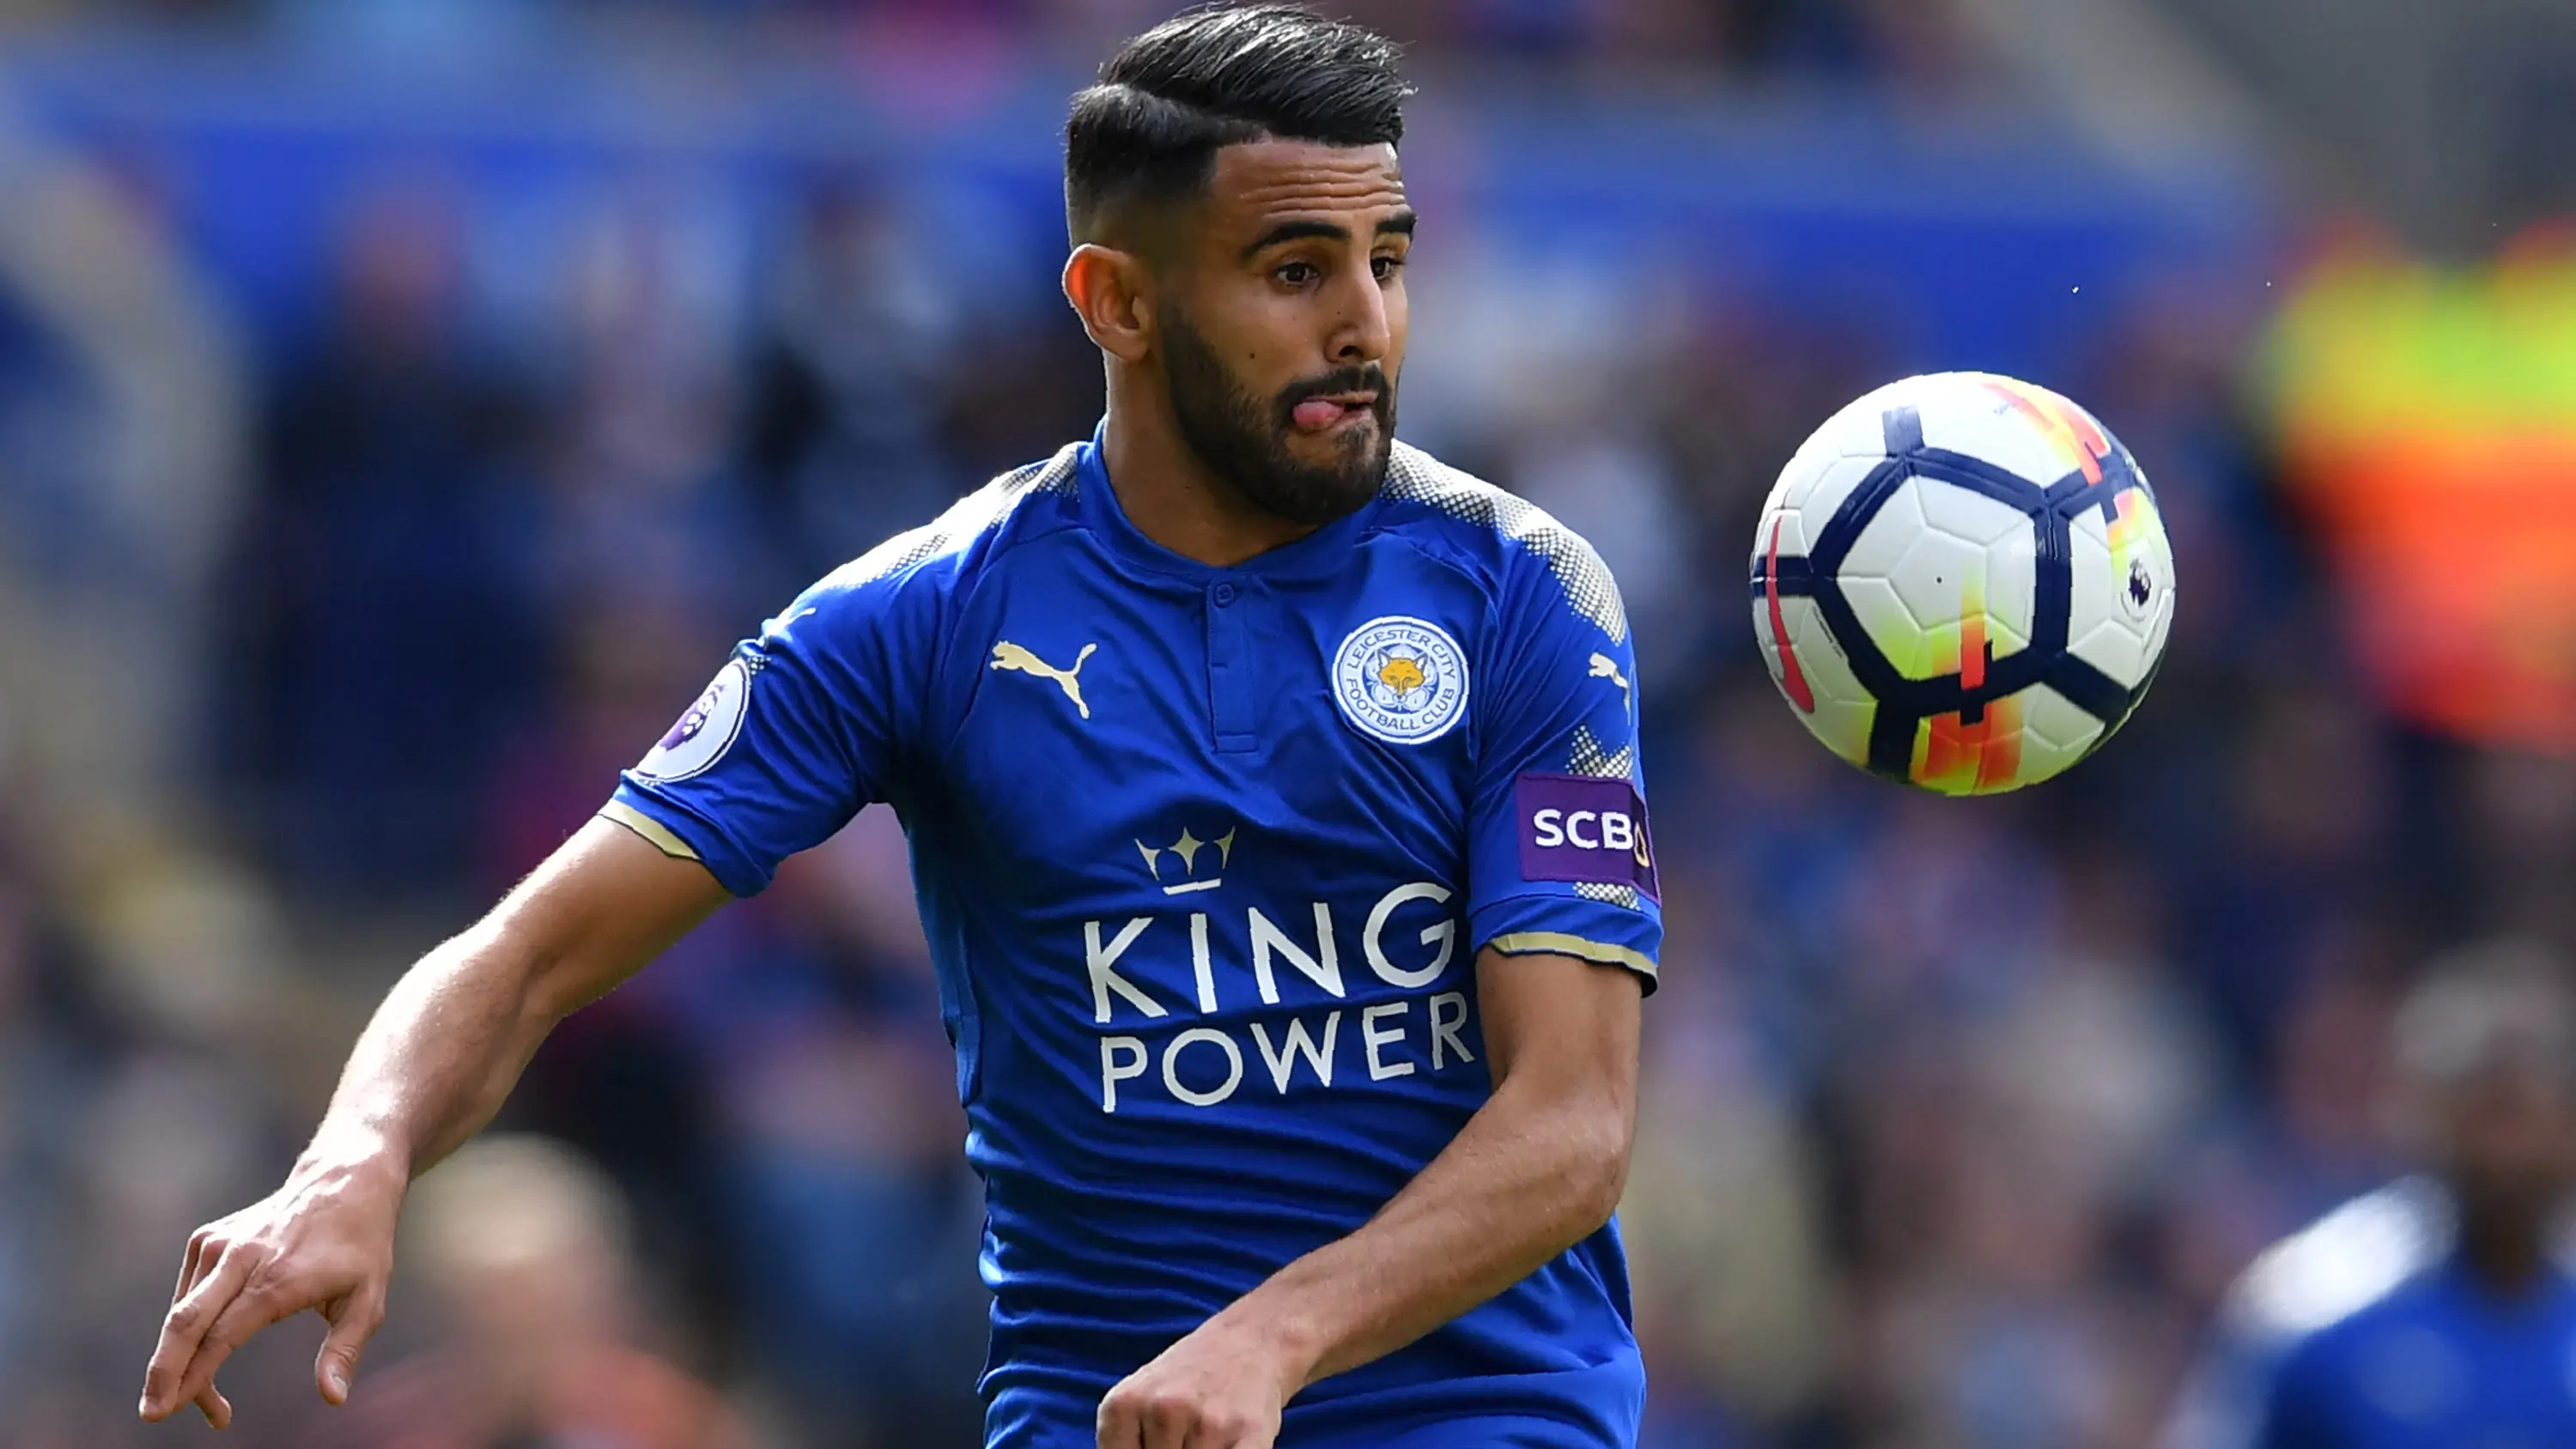 Pemain Leicester City, Riyad Mahrez mencatatkan namanya dalam daftar penghasil assists terbanyak dengan total empat assists untuk timnya hingga pekan ke-11 Premier League. (AFP/Ben Stansall)